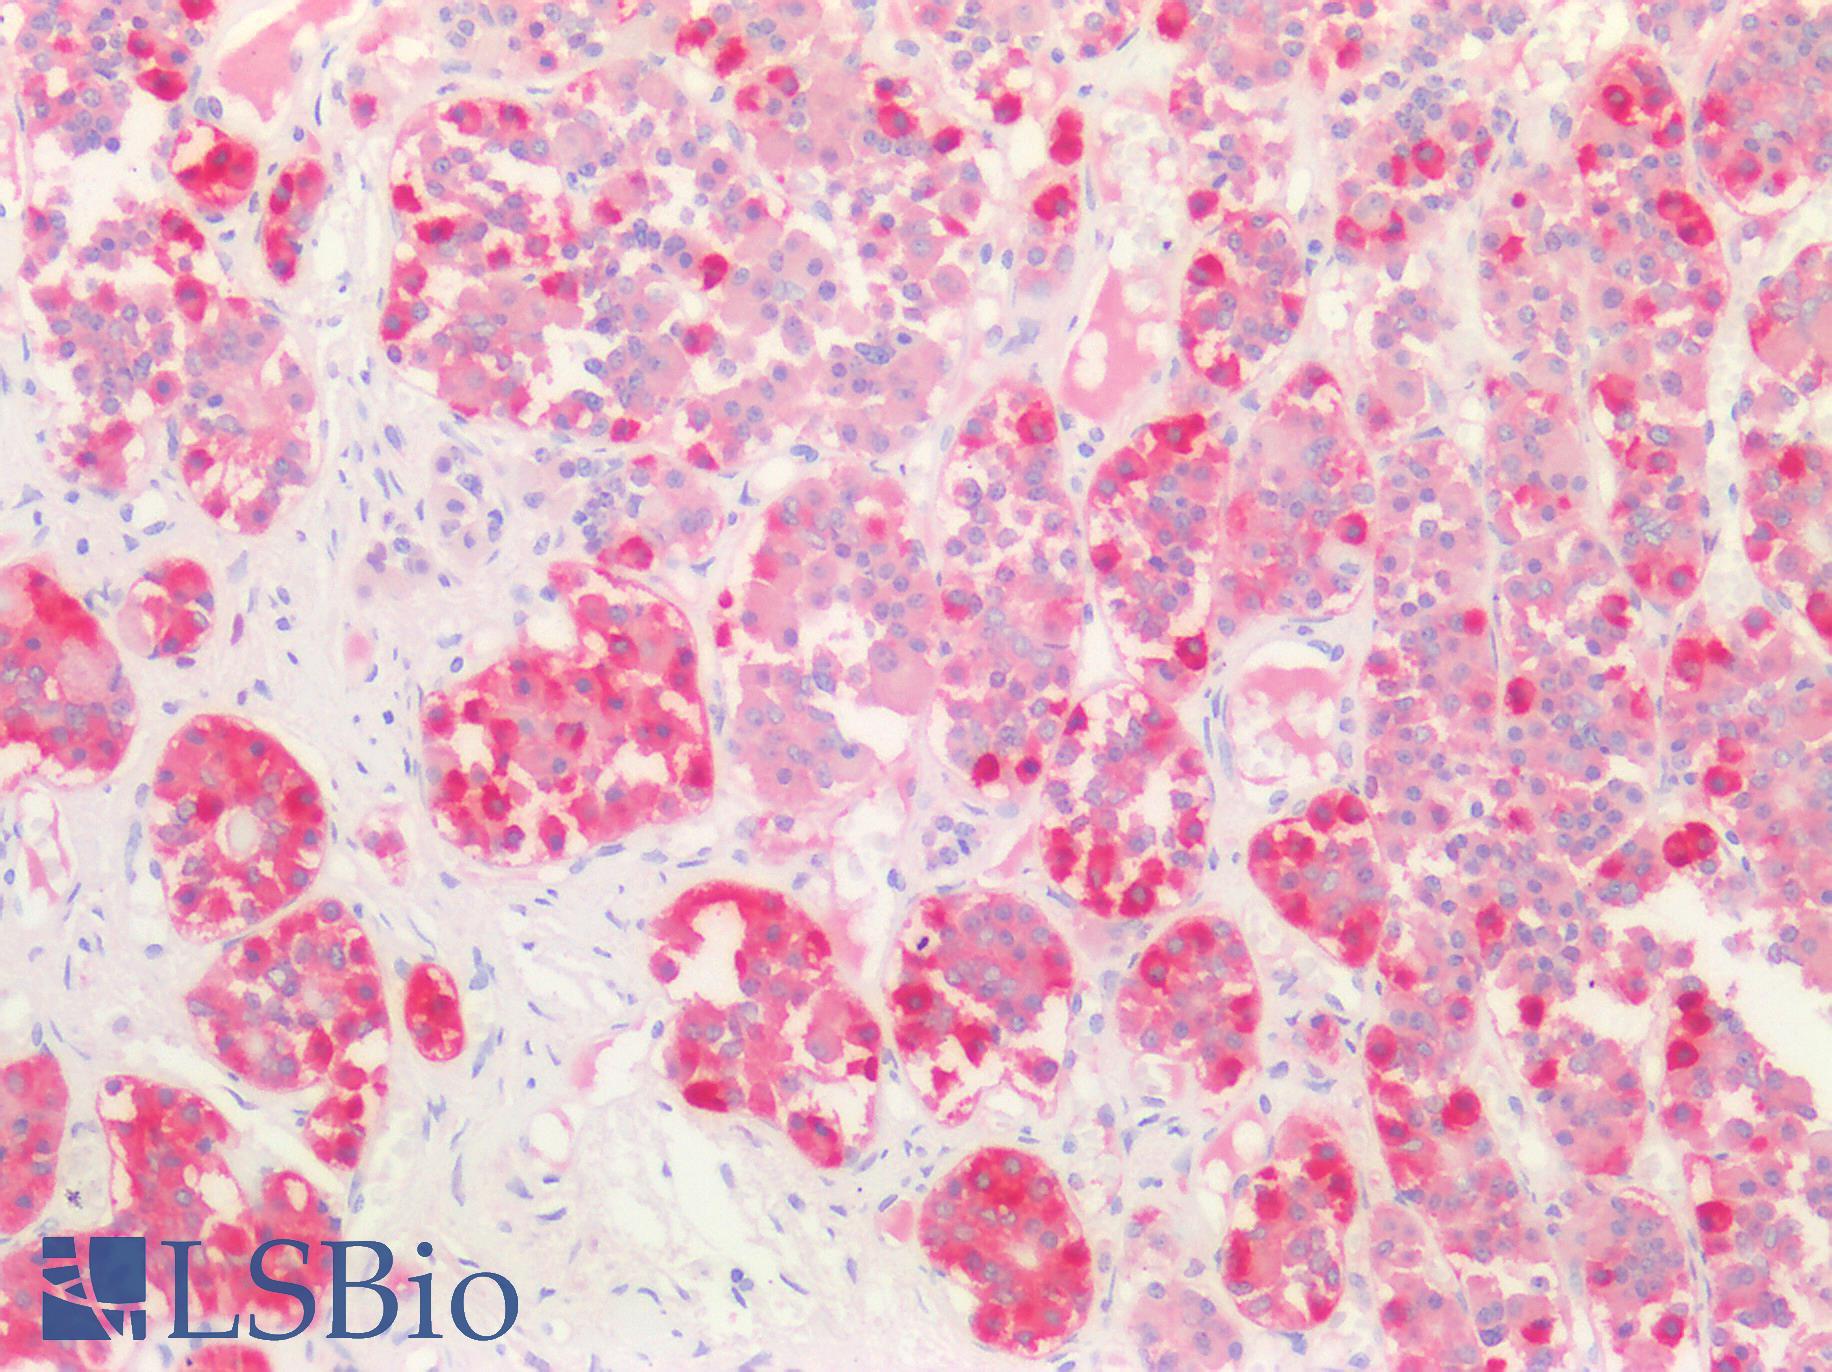 FSHB / FSH Beta Antibody - Human Pituitary: Formalin-Fixed, Paraffin-Embedded (FFPE)